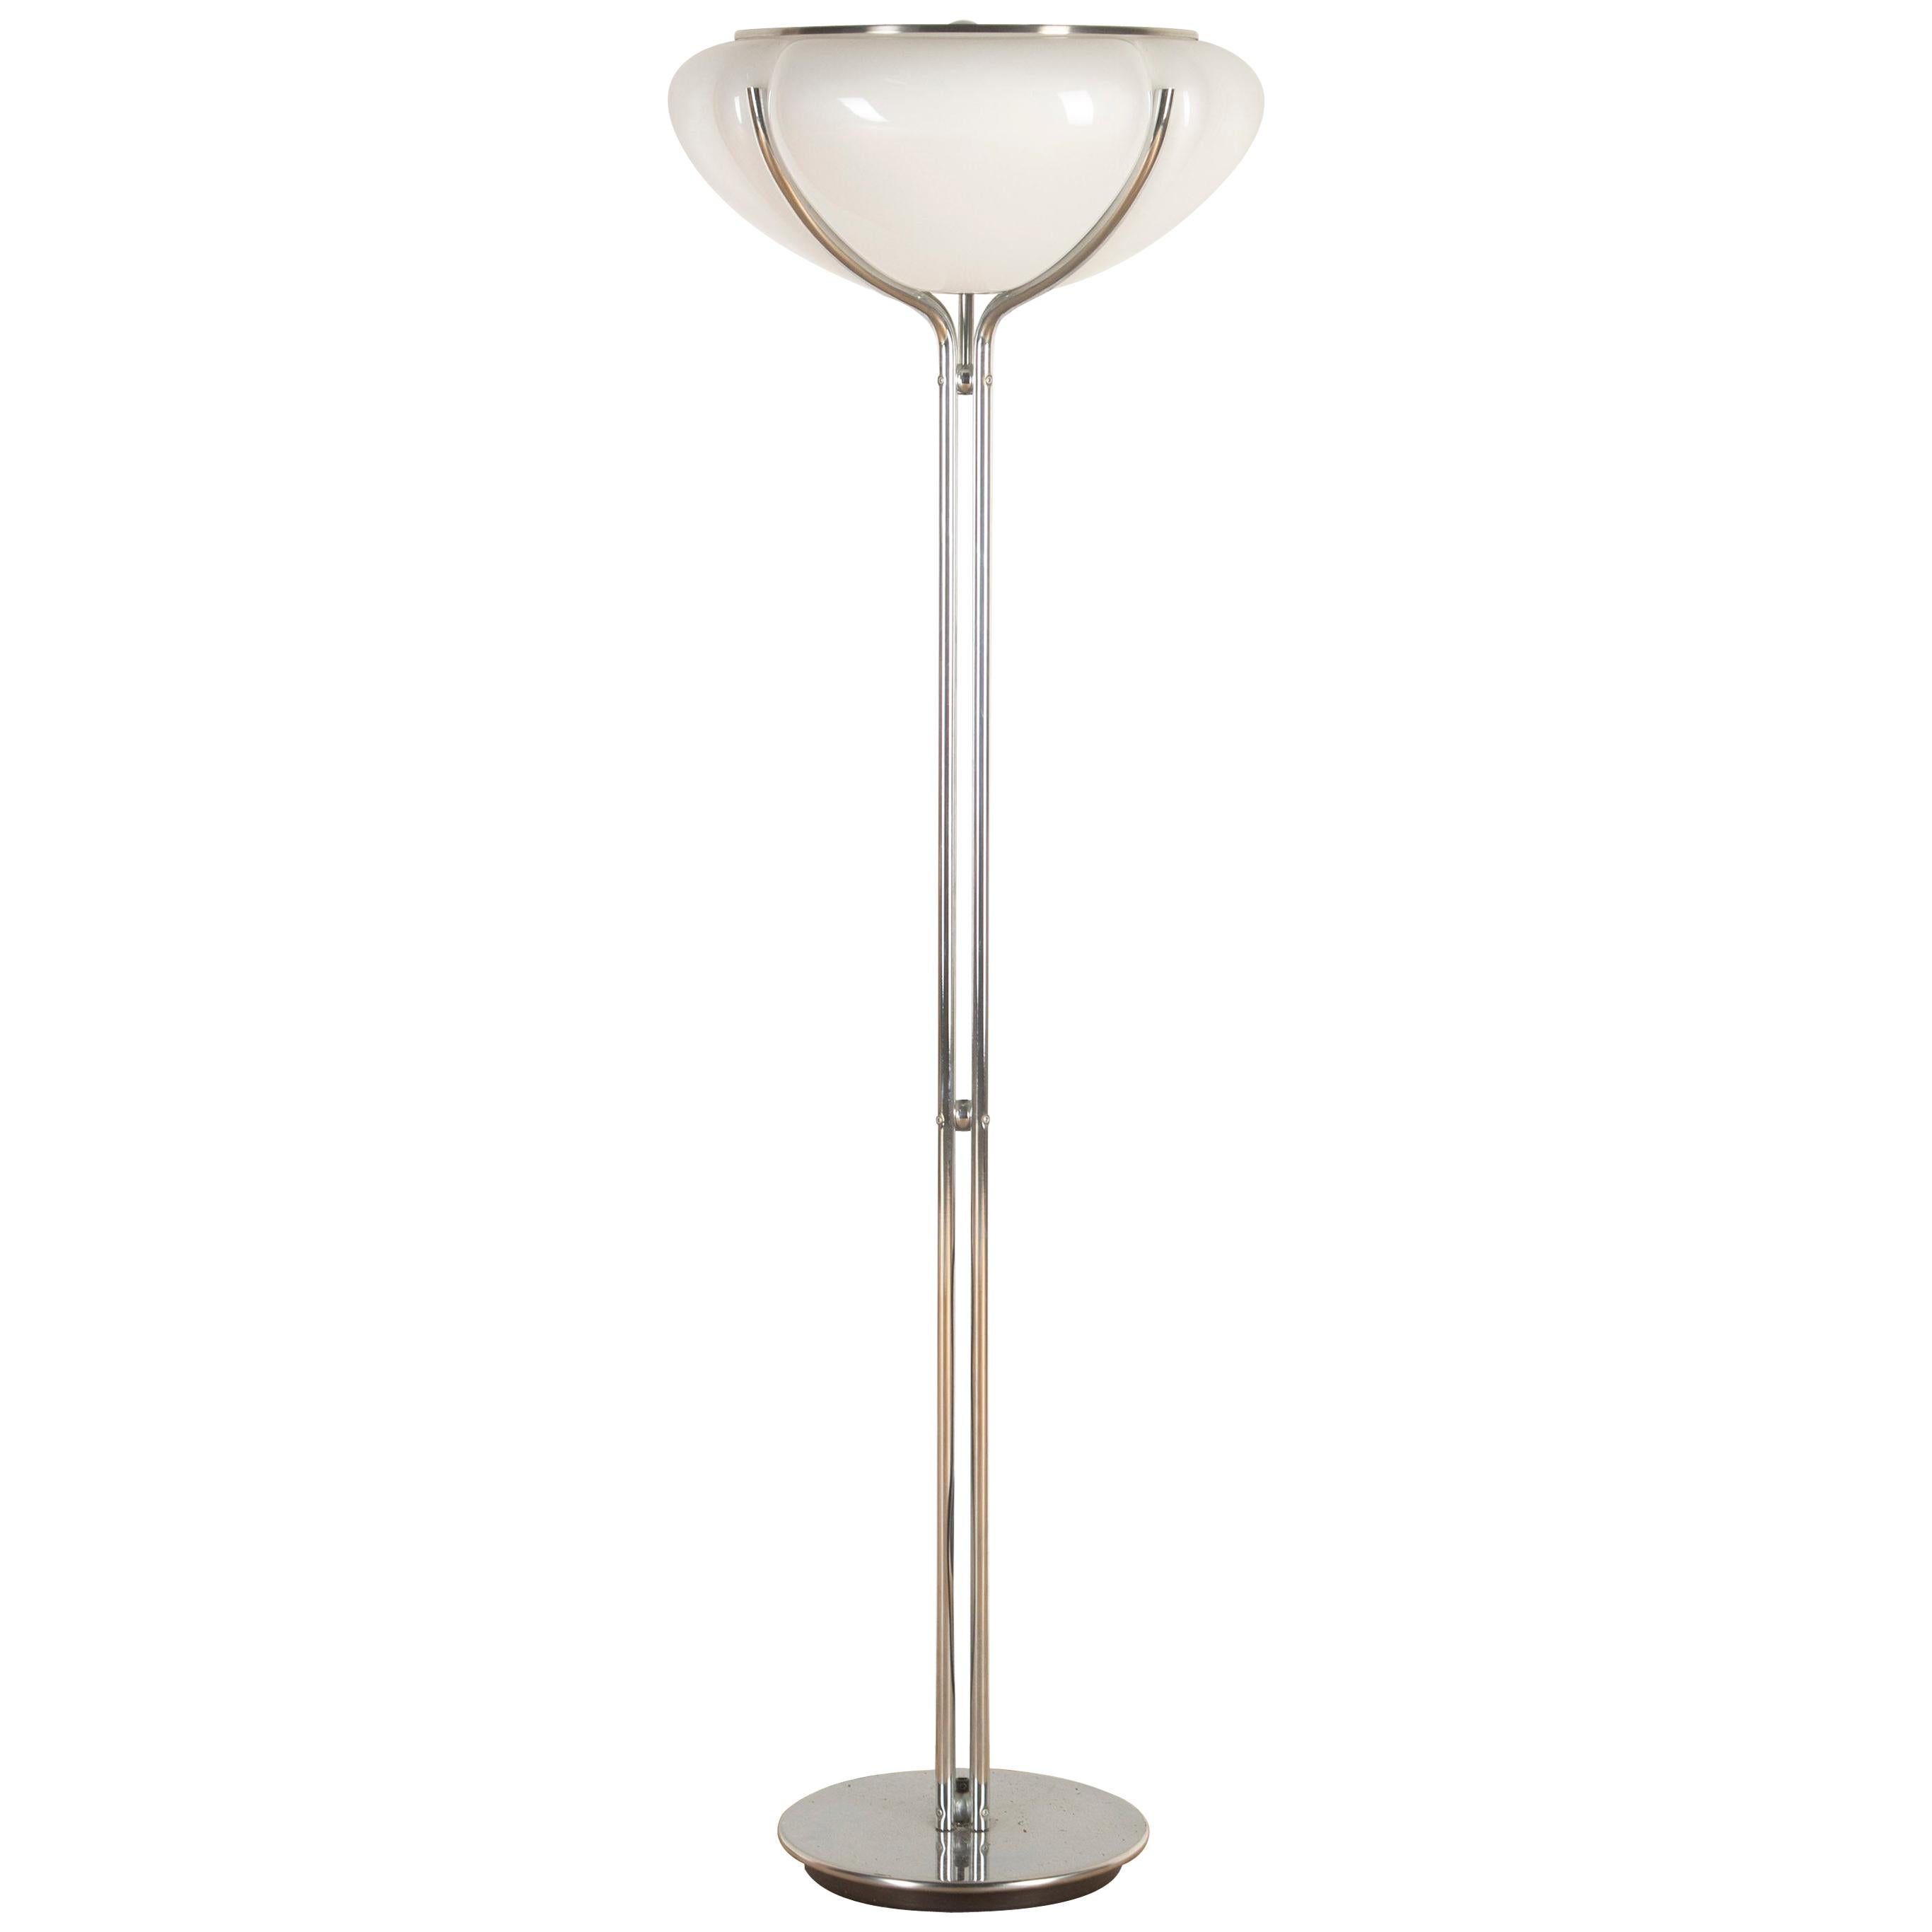 1970s Italian Design Standard Lamp